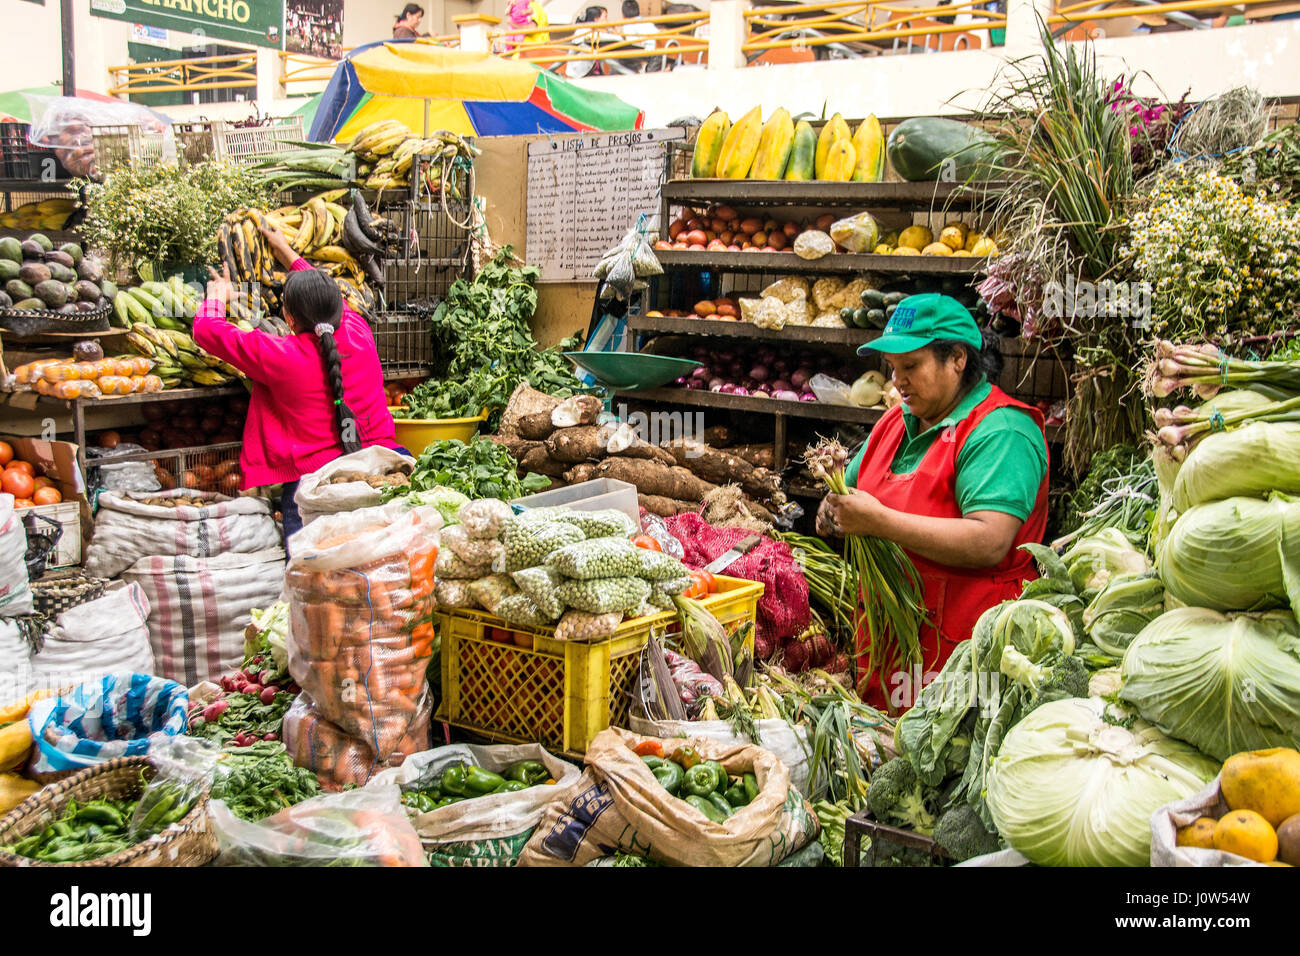 Woman selling vegtables, Otavalo, Ecuador, outdoor market.. Stock Photo